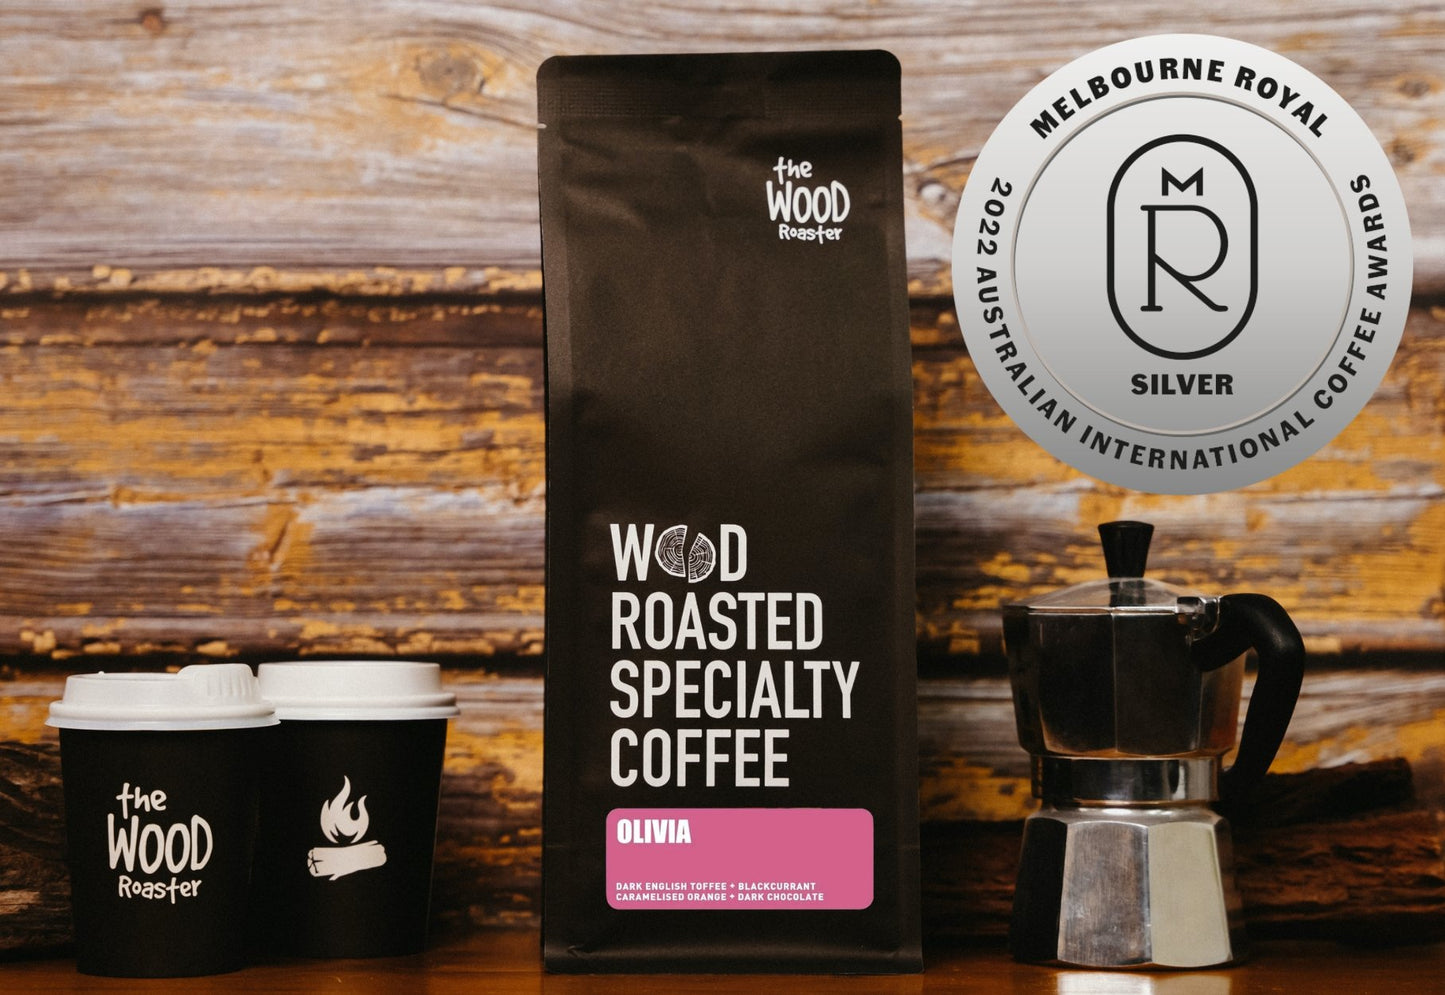 Success at the Australian International Coffee Awards - The Wood Roaster